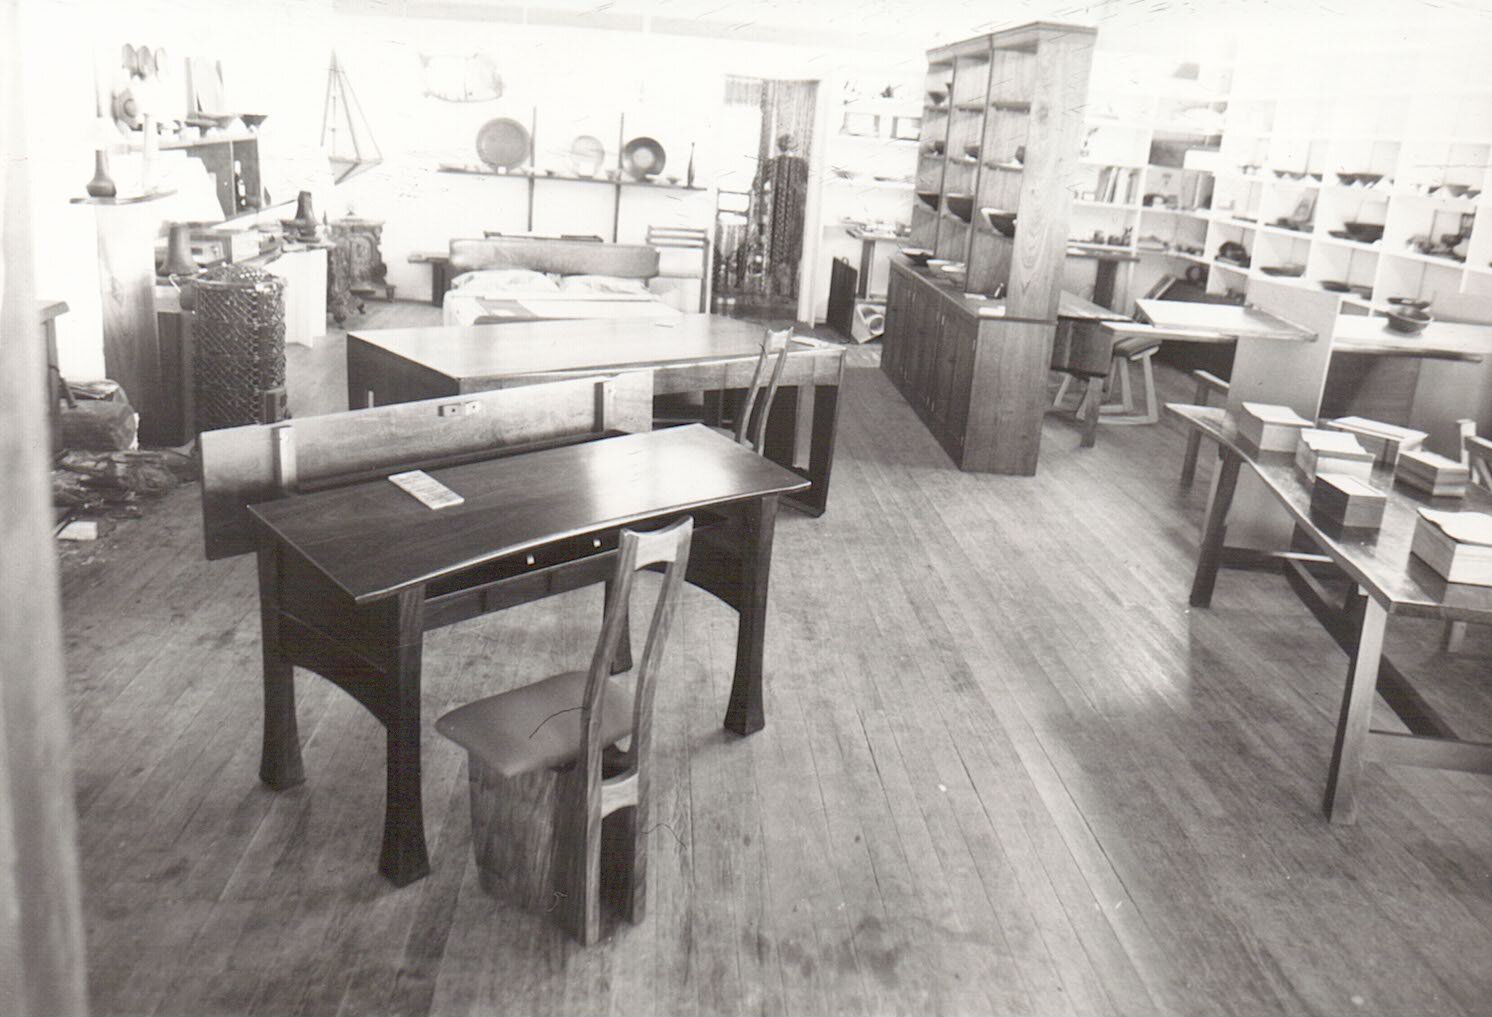 Original Gallery interior - Mostly David Mac Laren’s furniture.